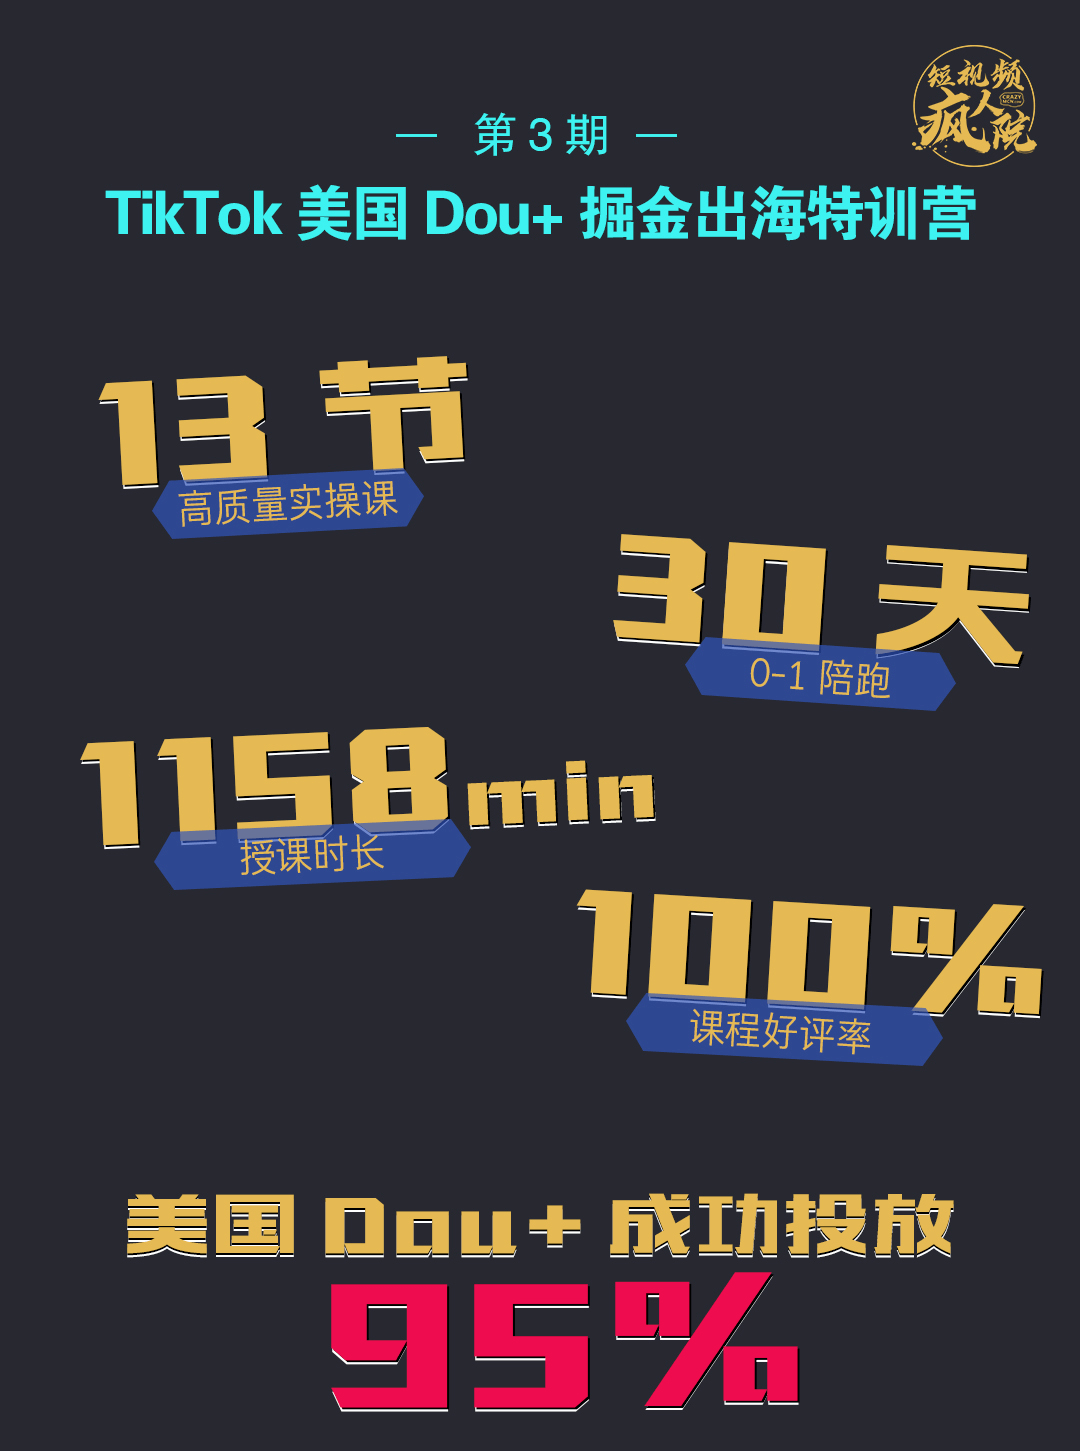 TikTok Dou+掘金特训营（第三期）-51自学联盟